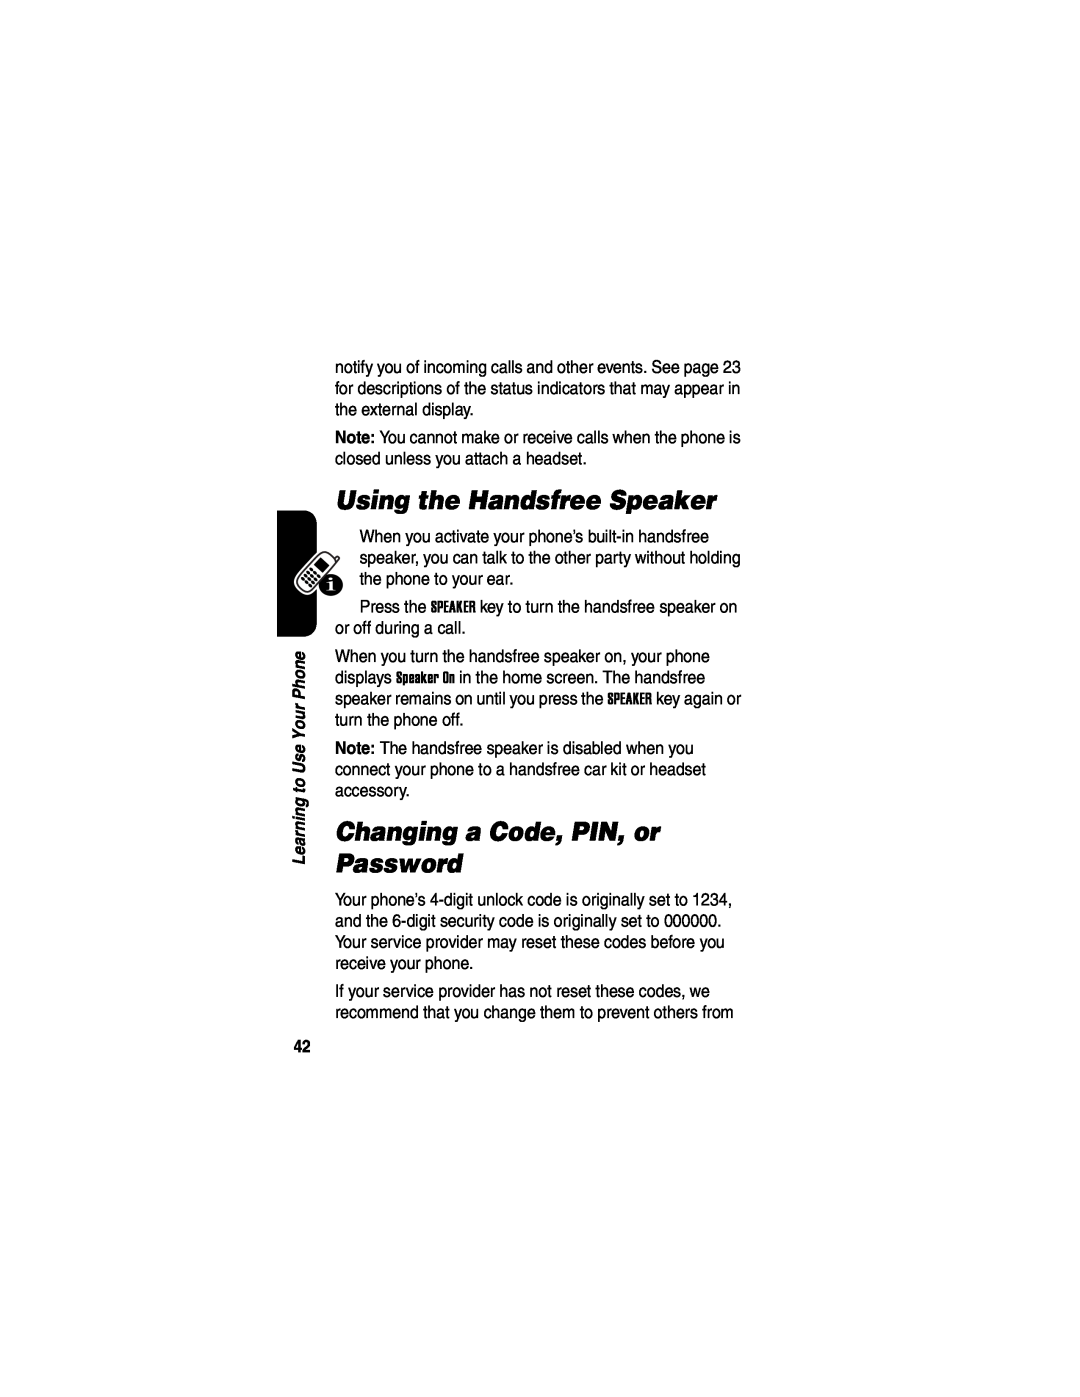 Motorola V551SLVATT manual Using the Handsfree Speaker, Changing a Code, PIN, or Password 